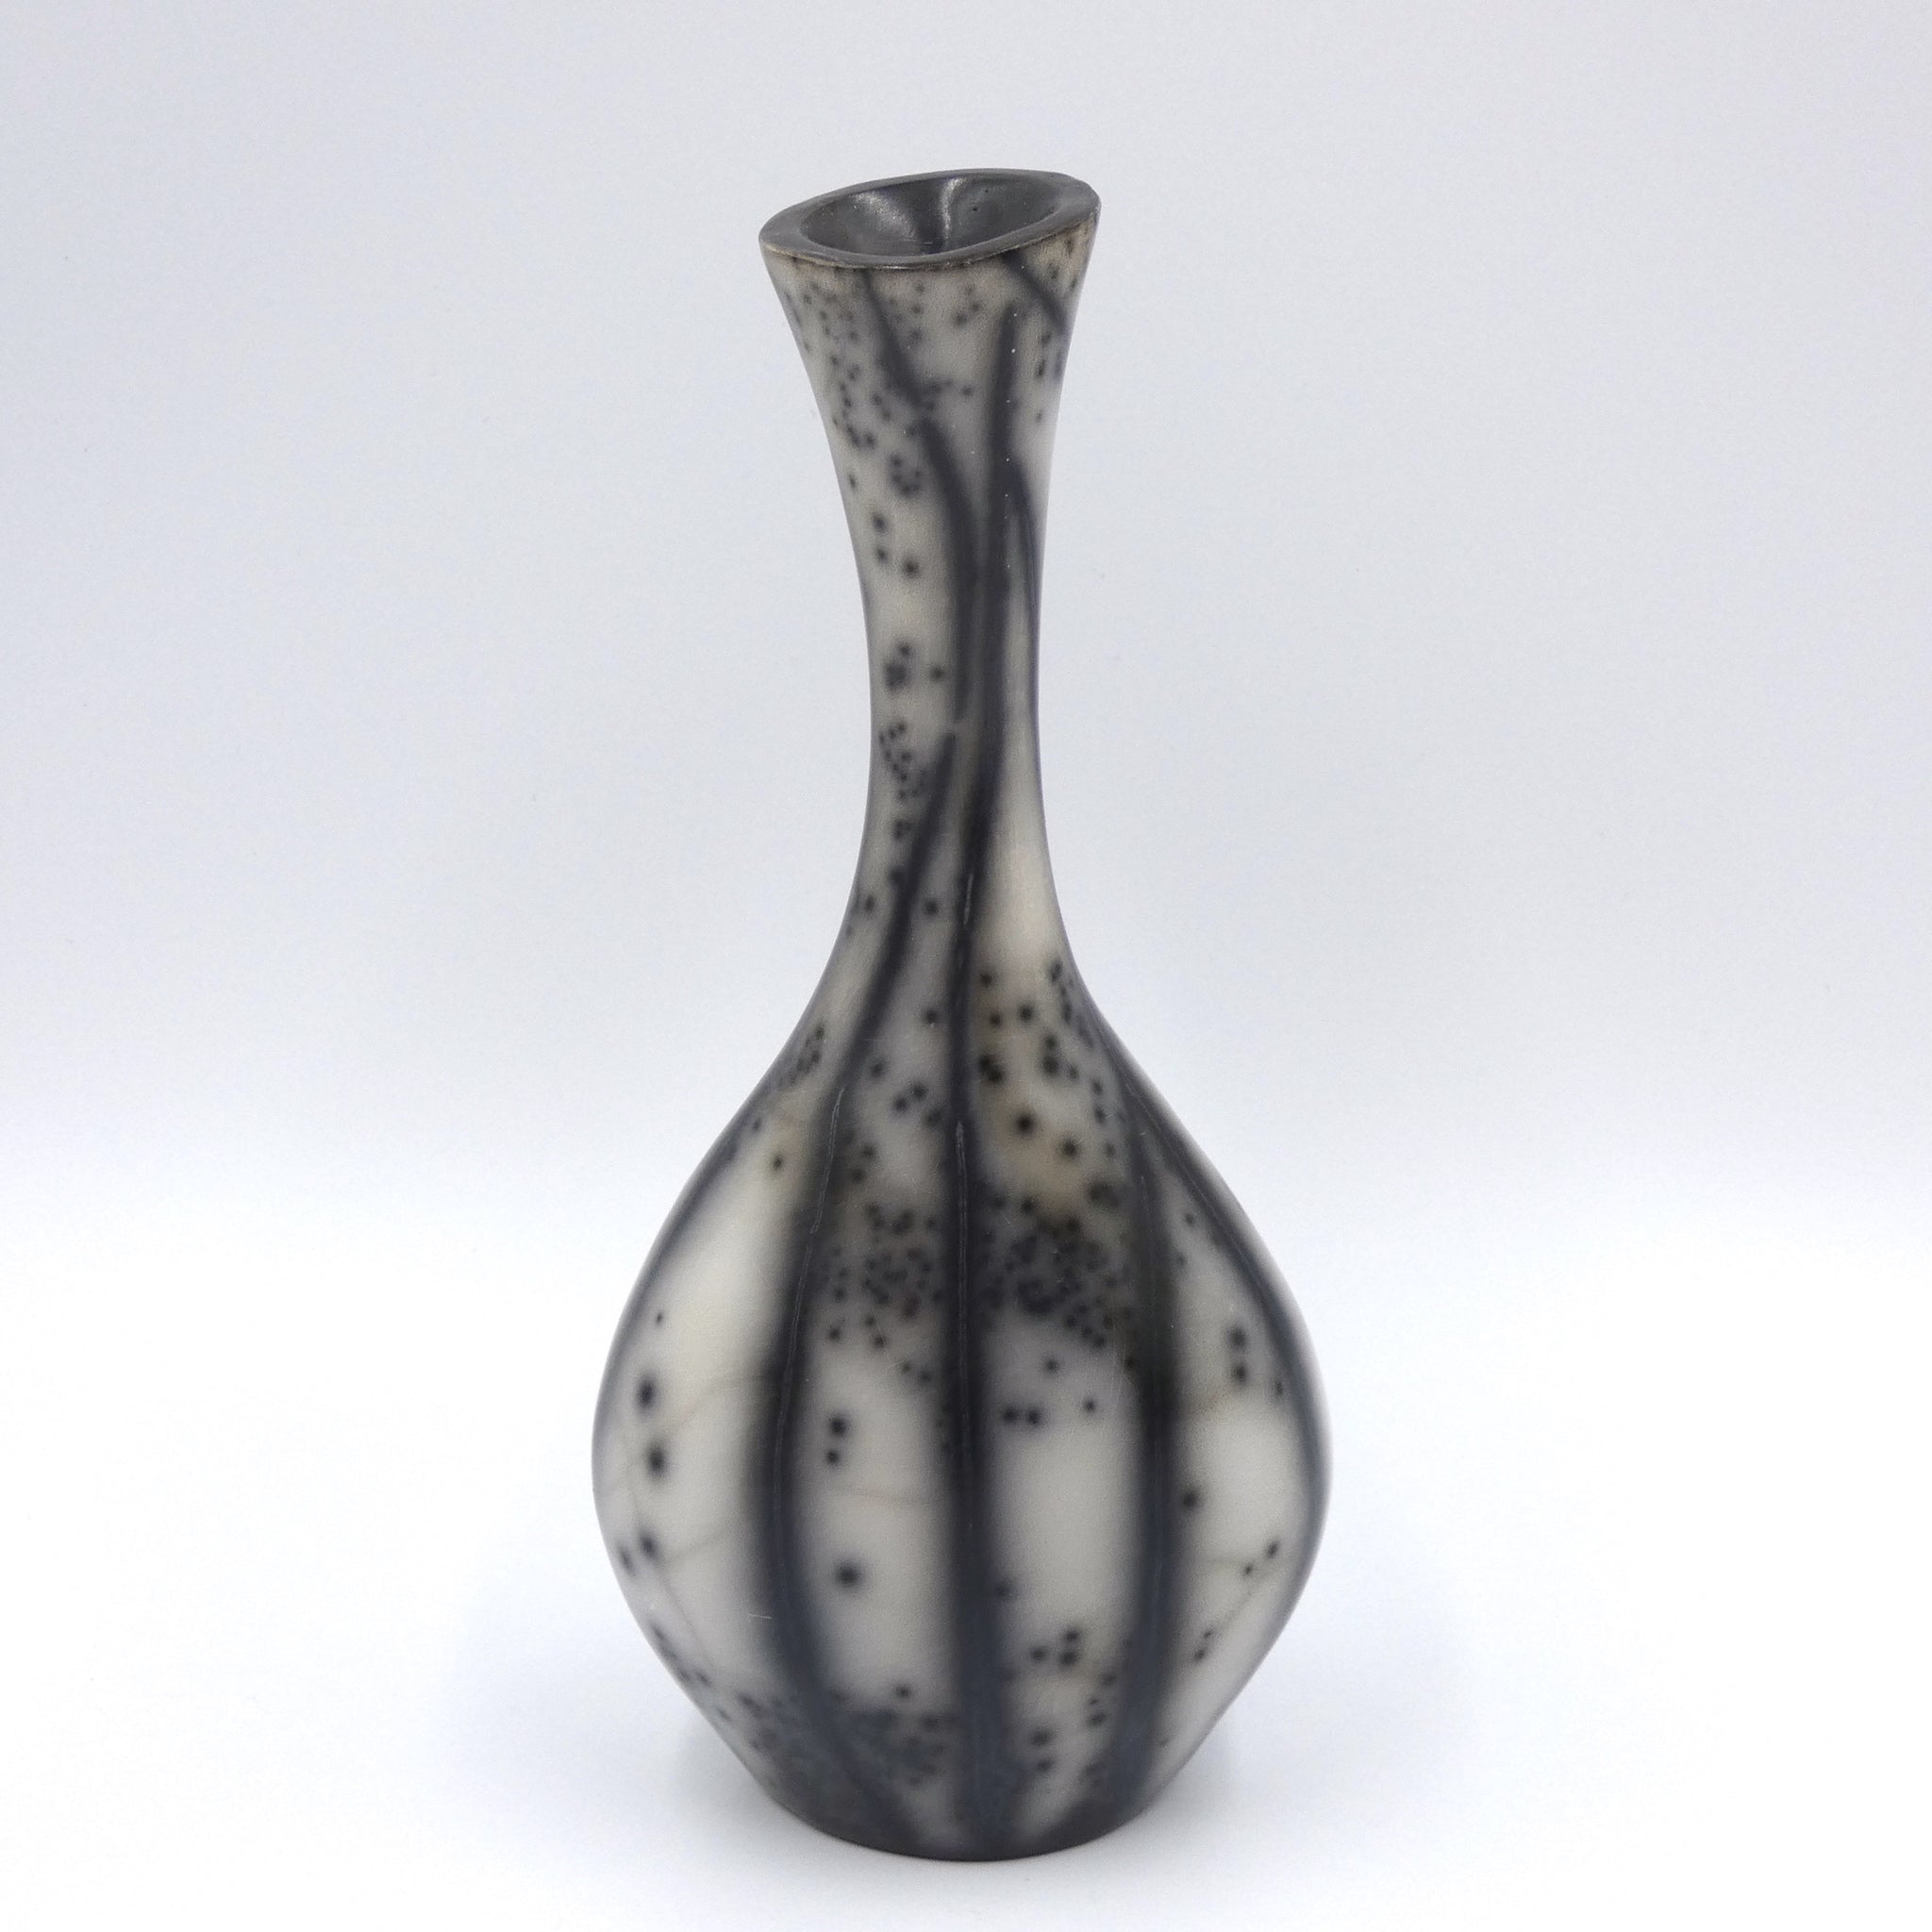 Raku fired narrow necked vase by artist Helen Rondell